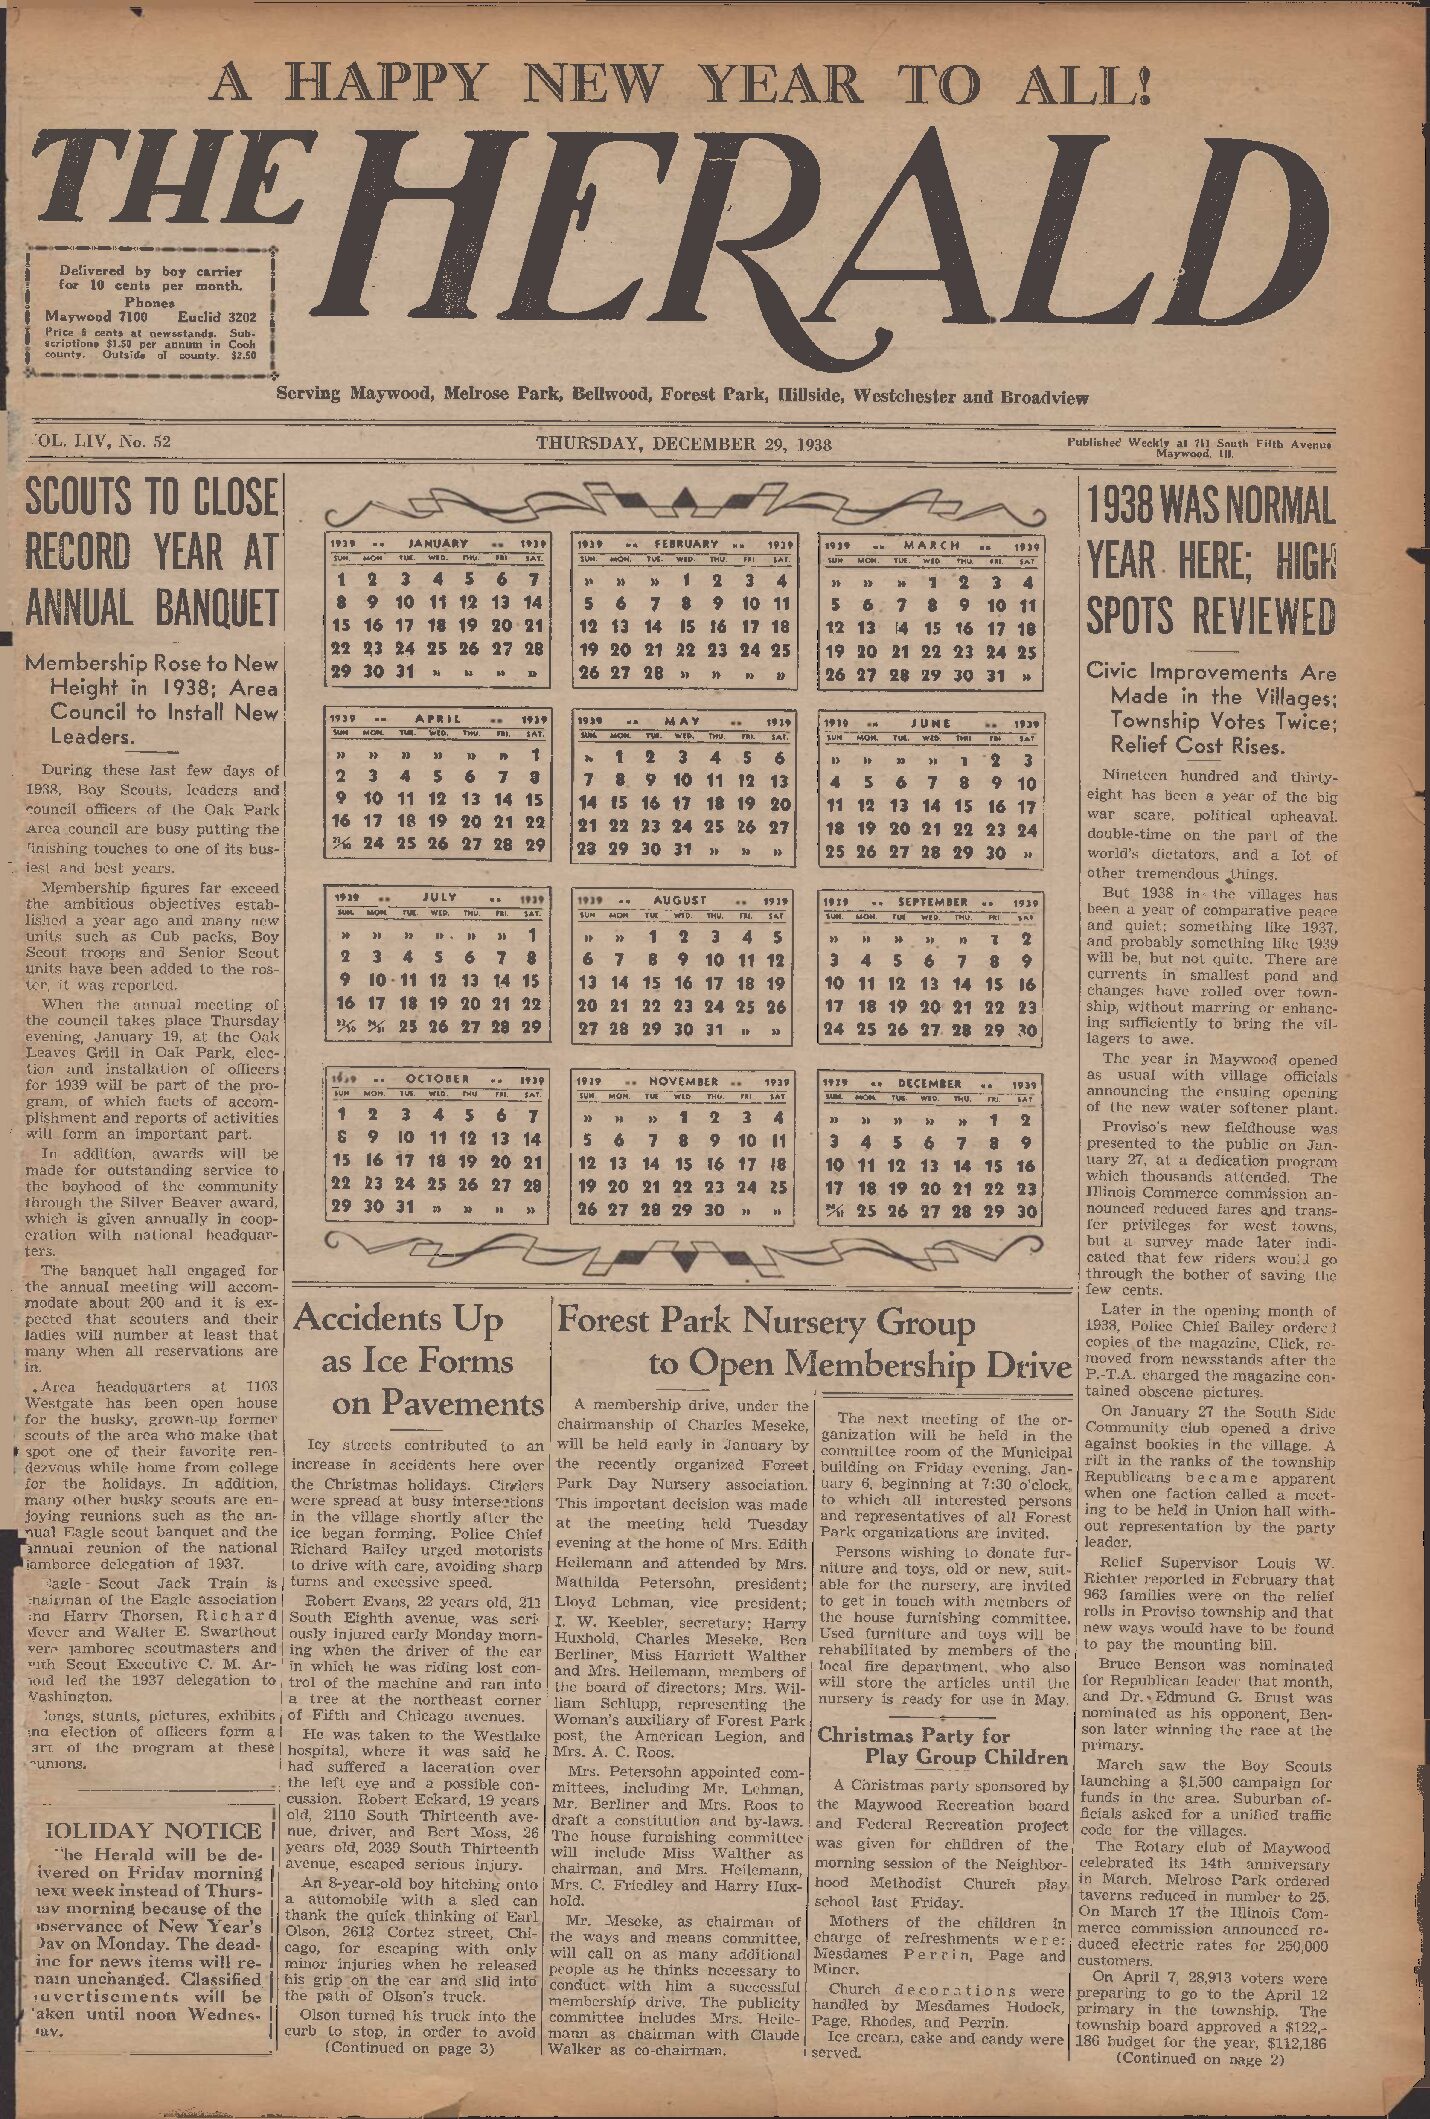 The Herald – 19381229